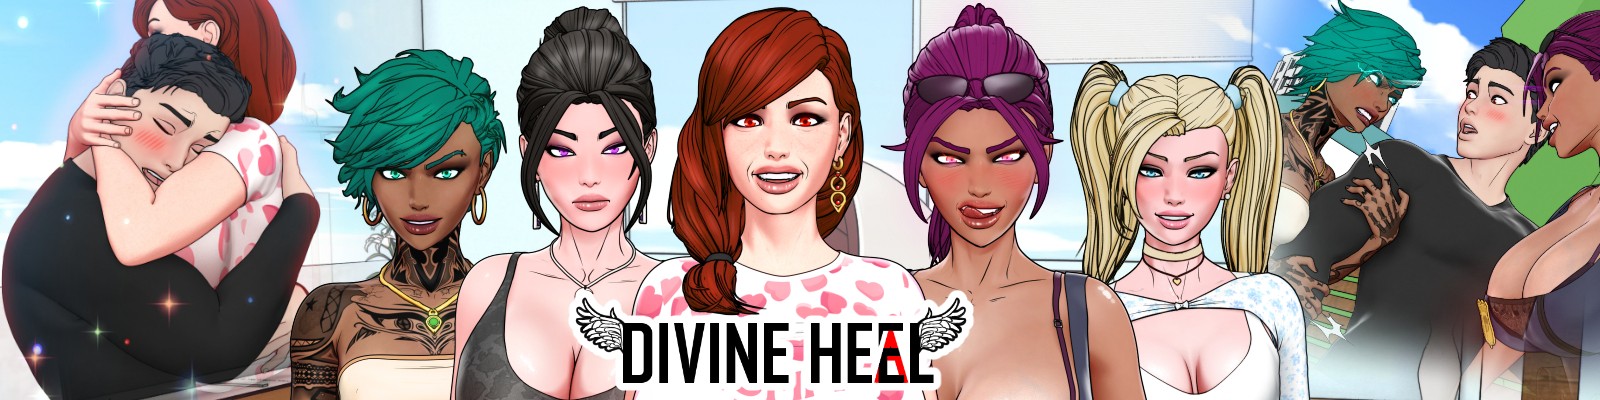 Divine Heel Adult Game Android Apk Download (2)